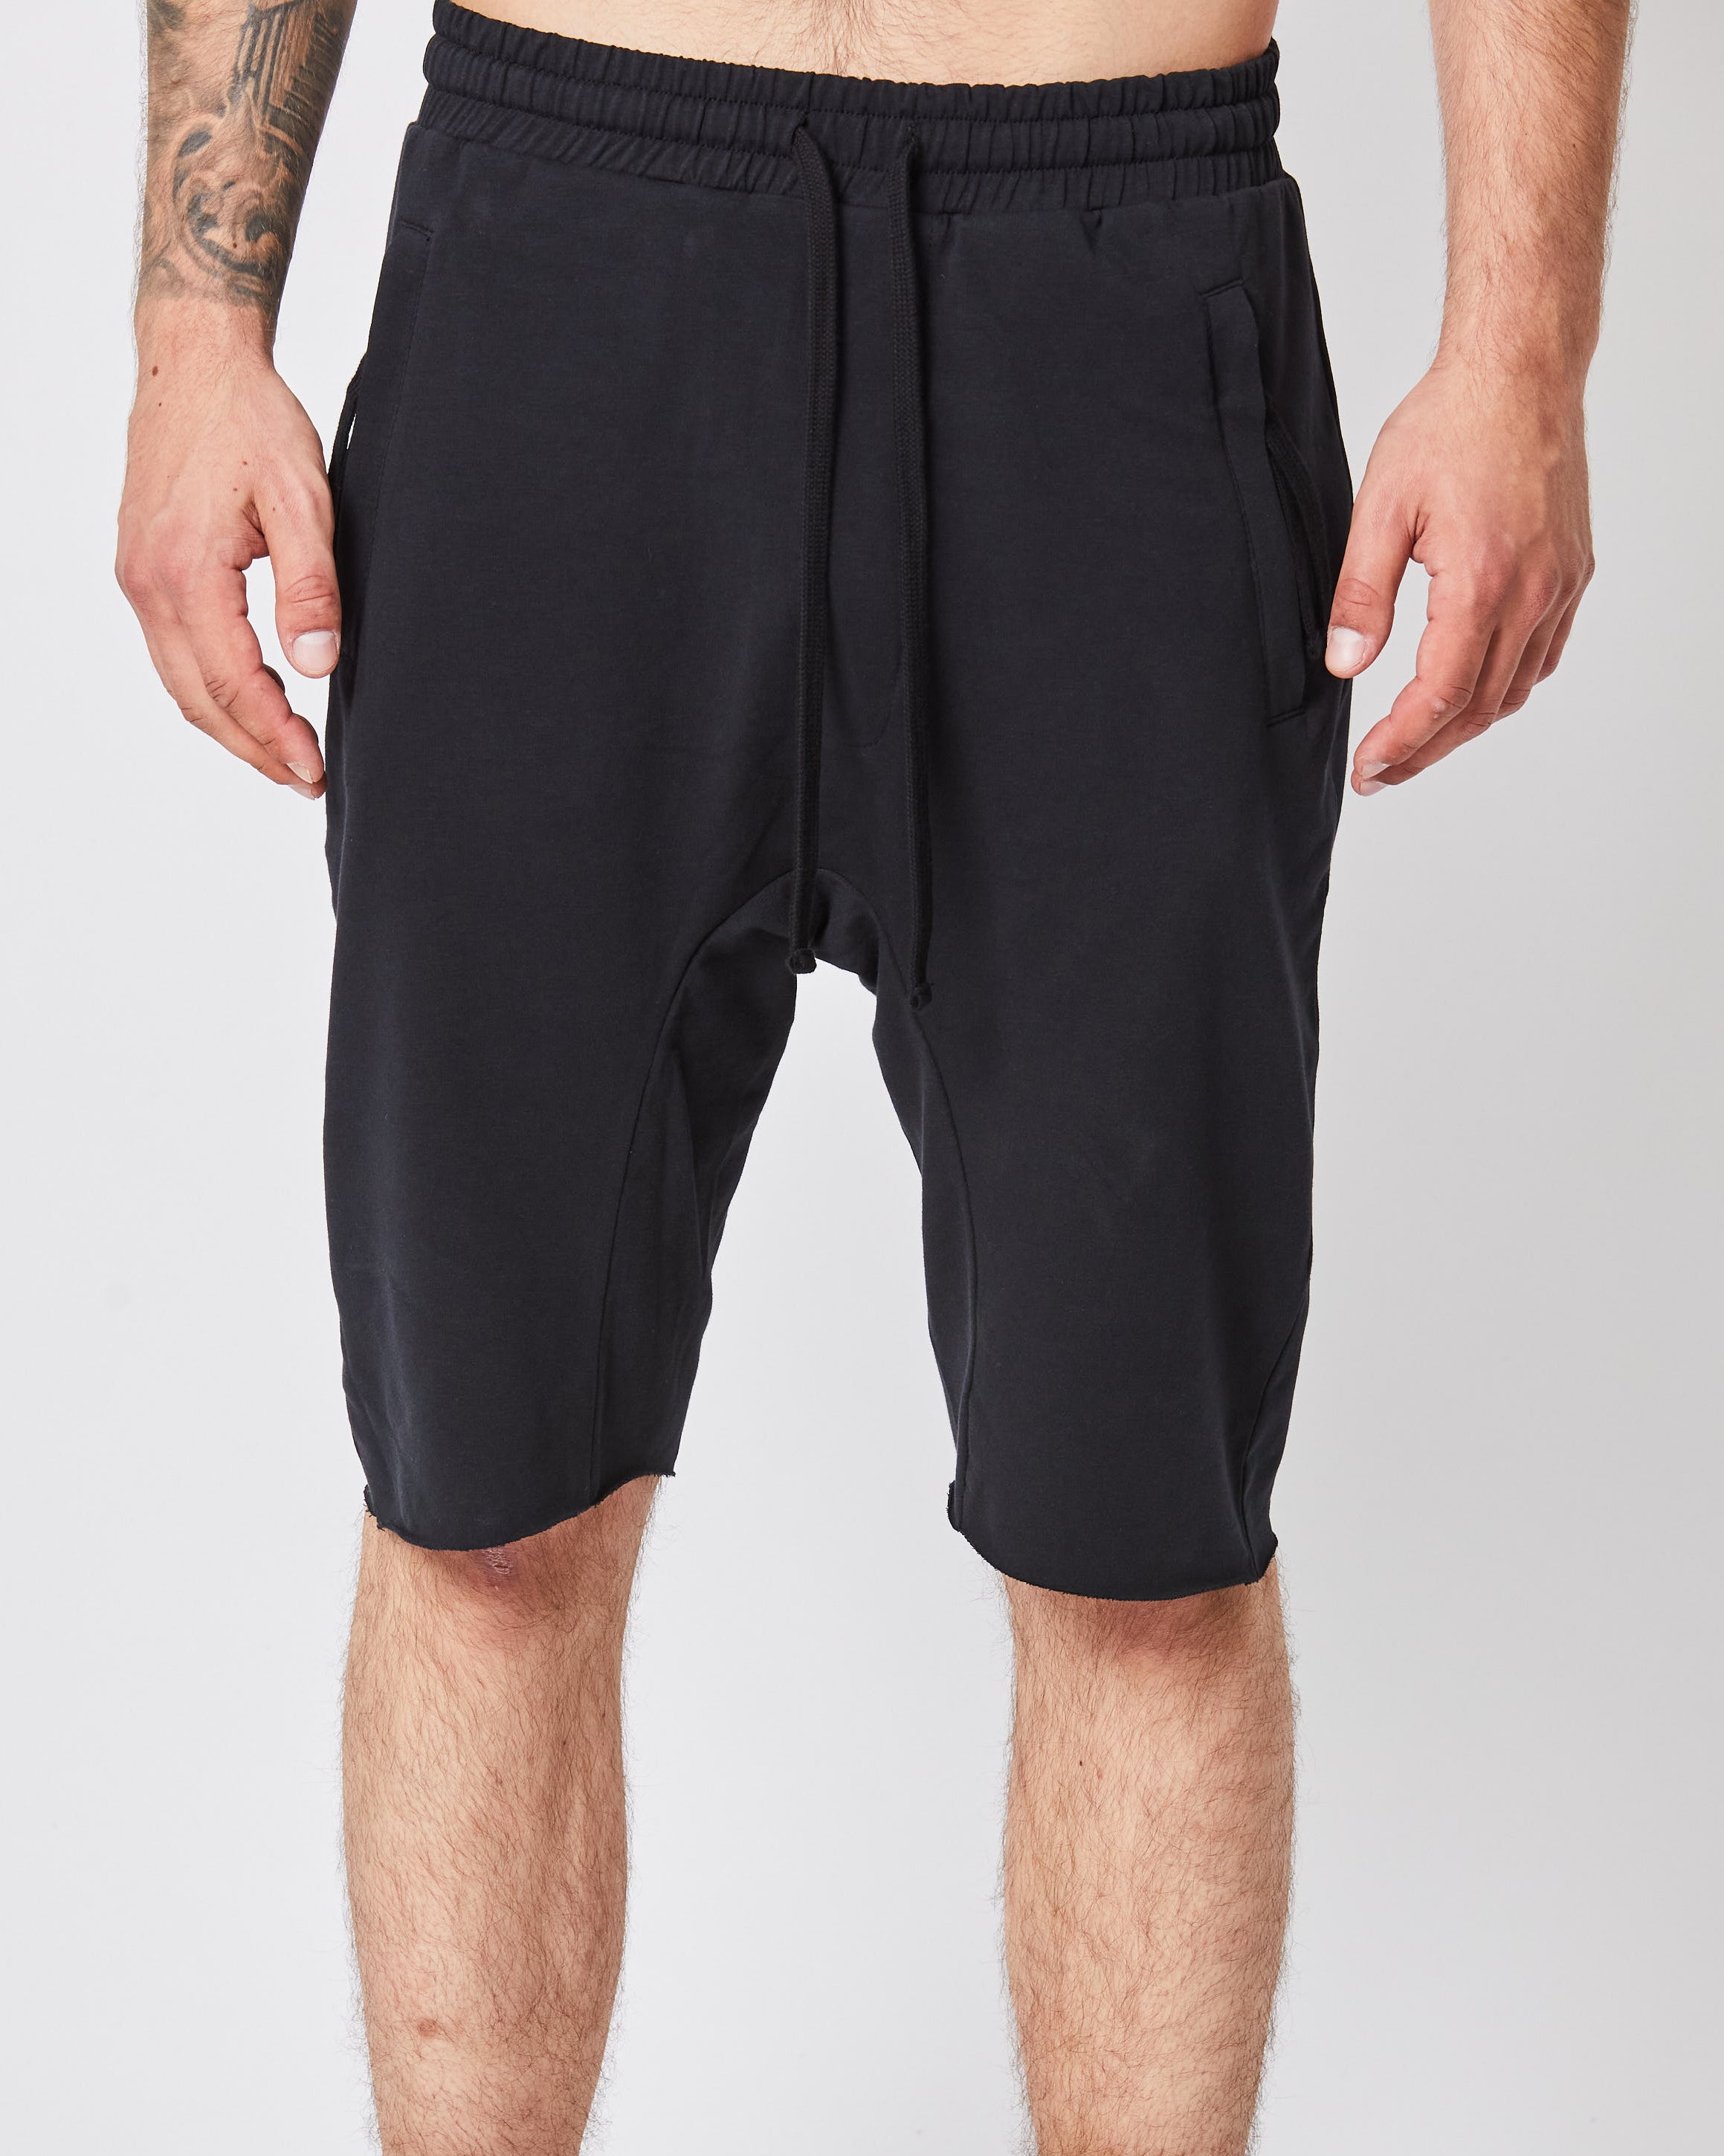 Black Stretch Cotton Modal Drop Crotch Shorts MST 379 – The Archive